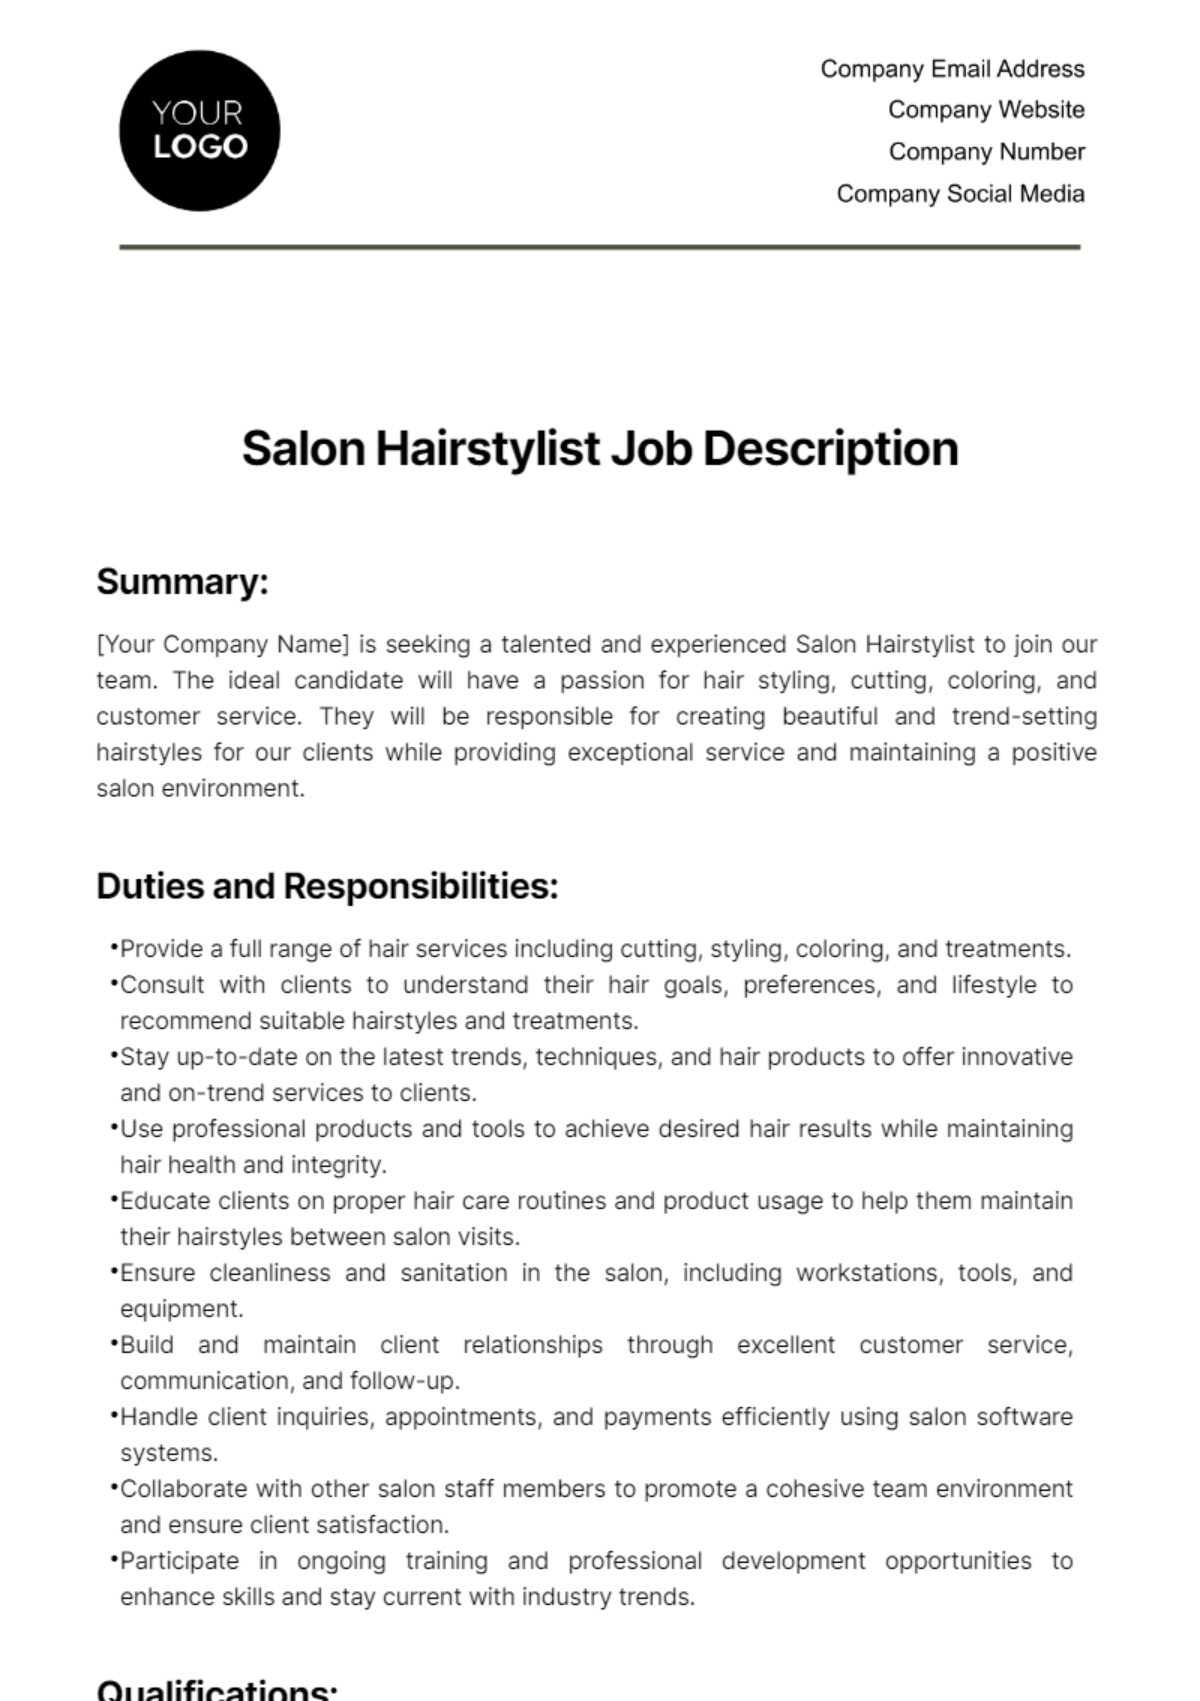 Salon Hairstylist Job Description Template